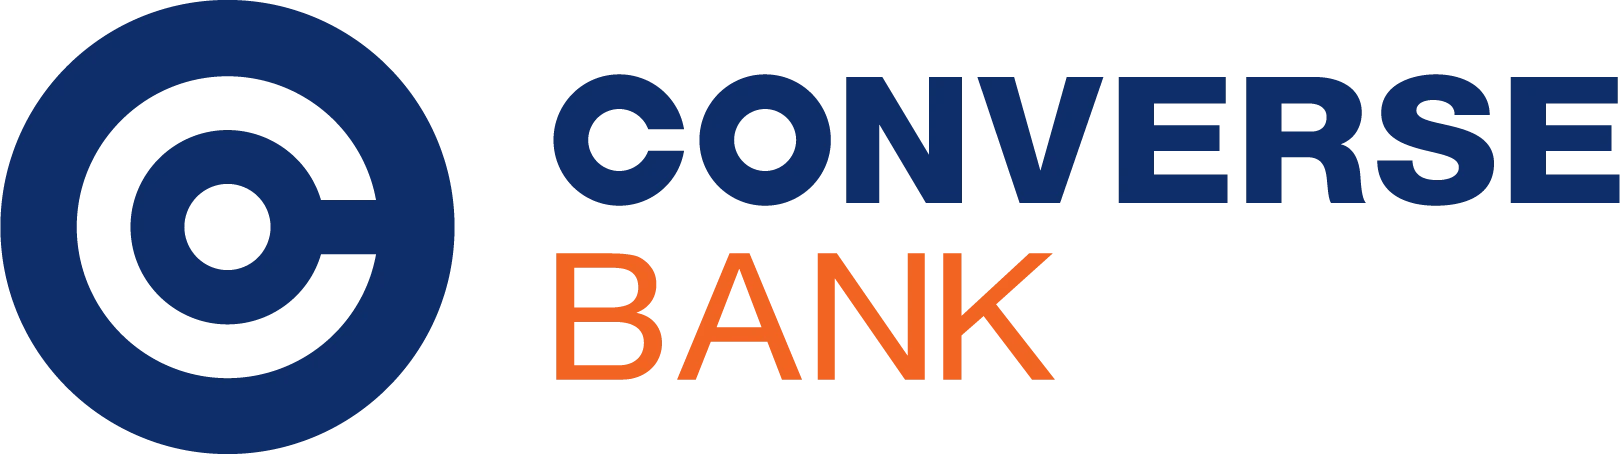 10912-converse-logo-17163014959278.png